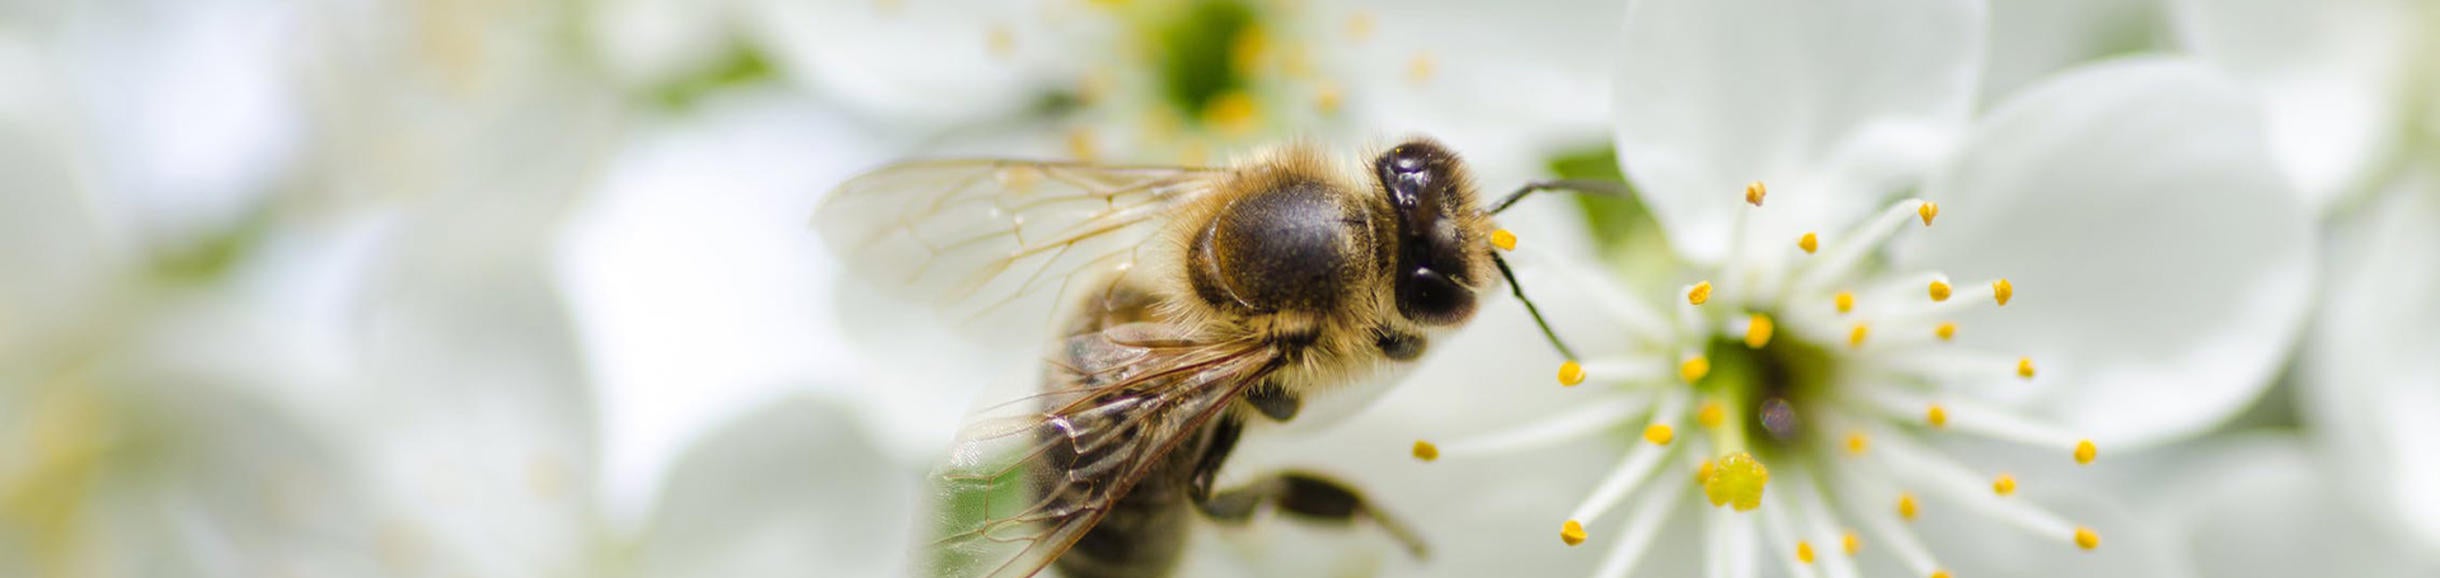 Bee on white blossom, source: pexel.com